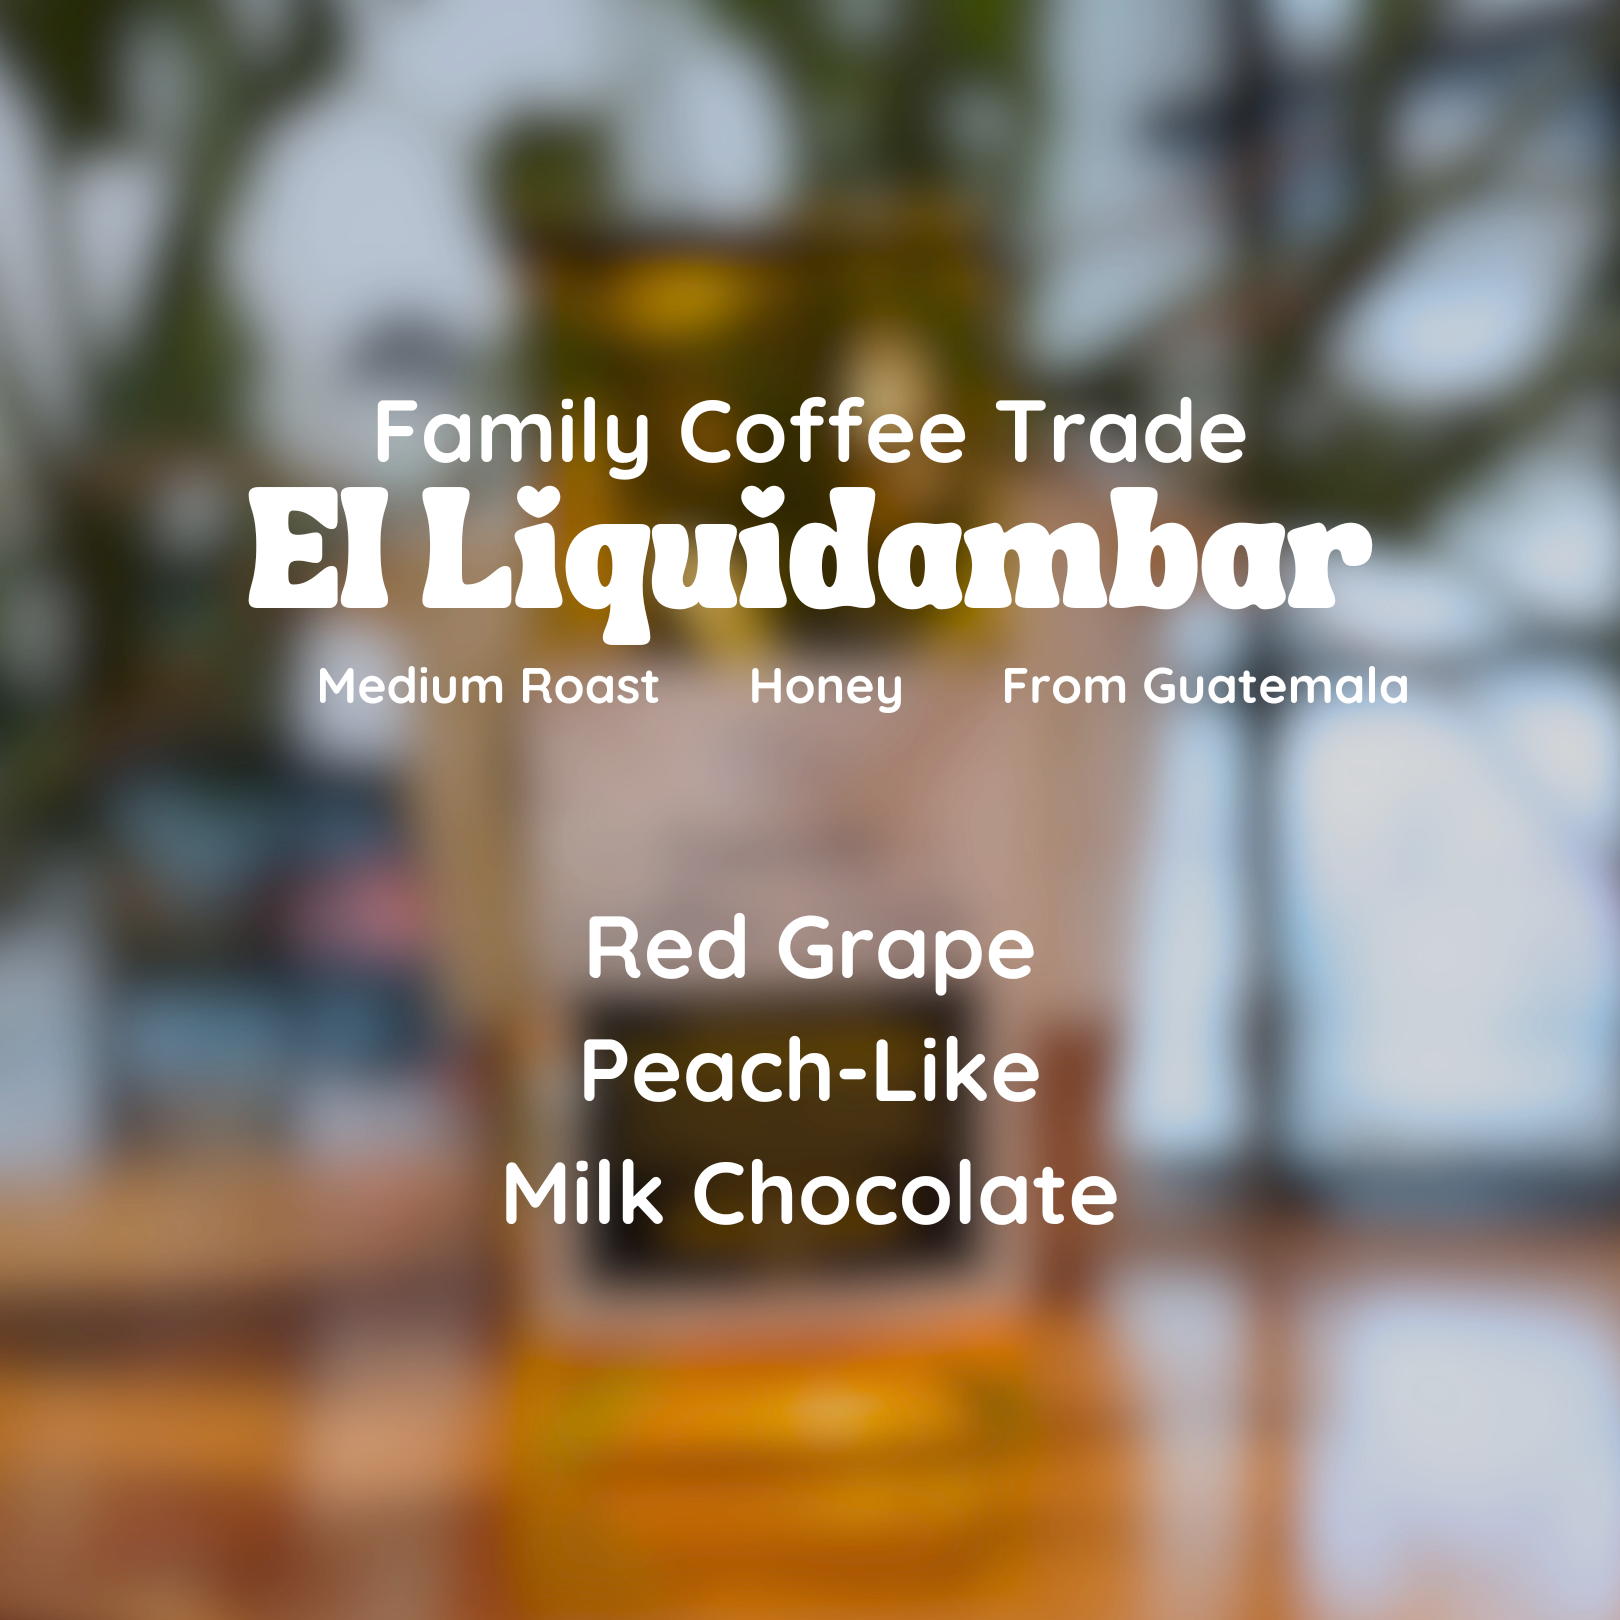 Family Coffee Trade El Liquidambar - Honey Processed Coffee Beans